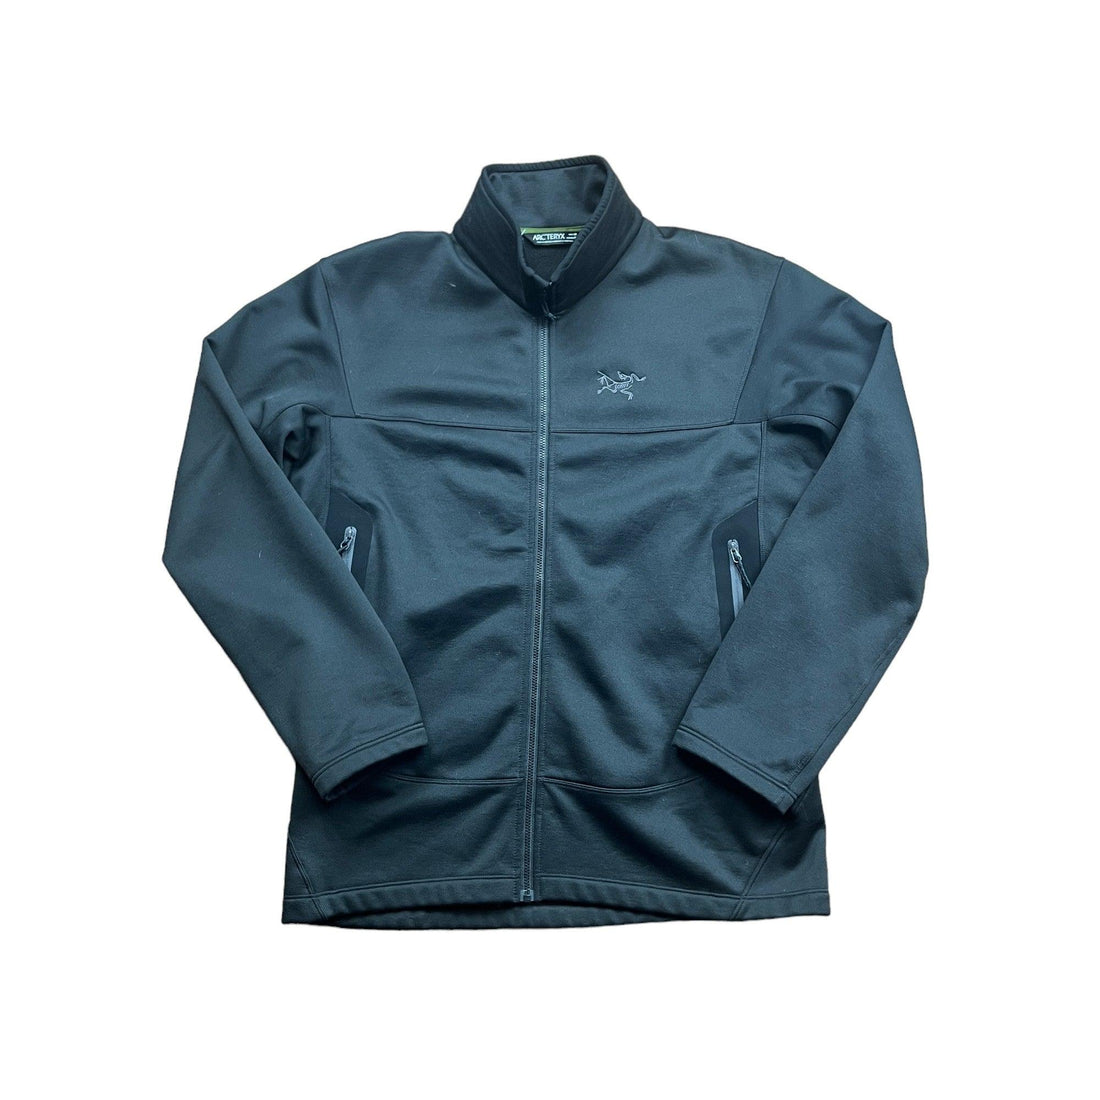 Vintage Black Arc'Teryx Full Zip Jacket - Medium - The Streetwear Studio